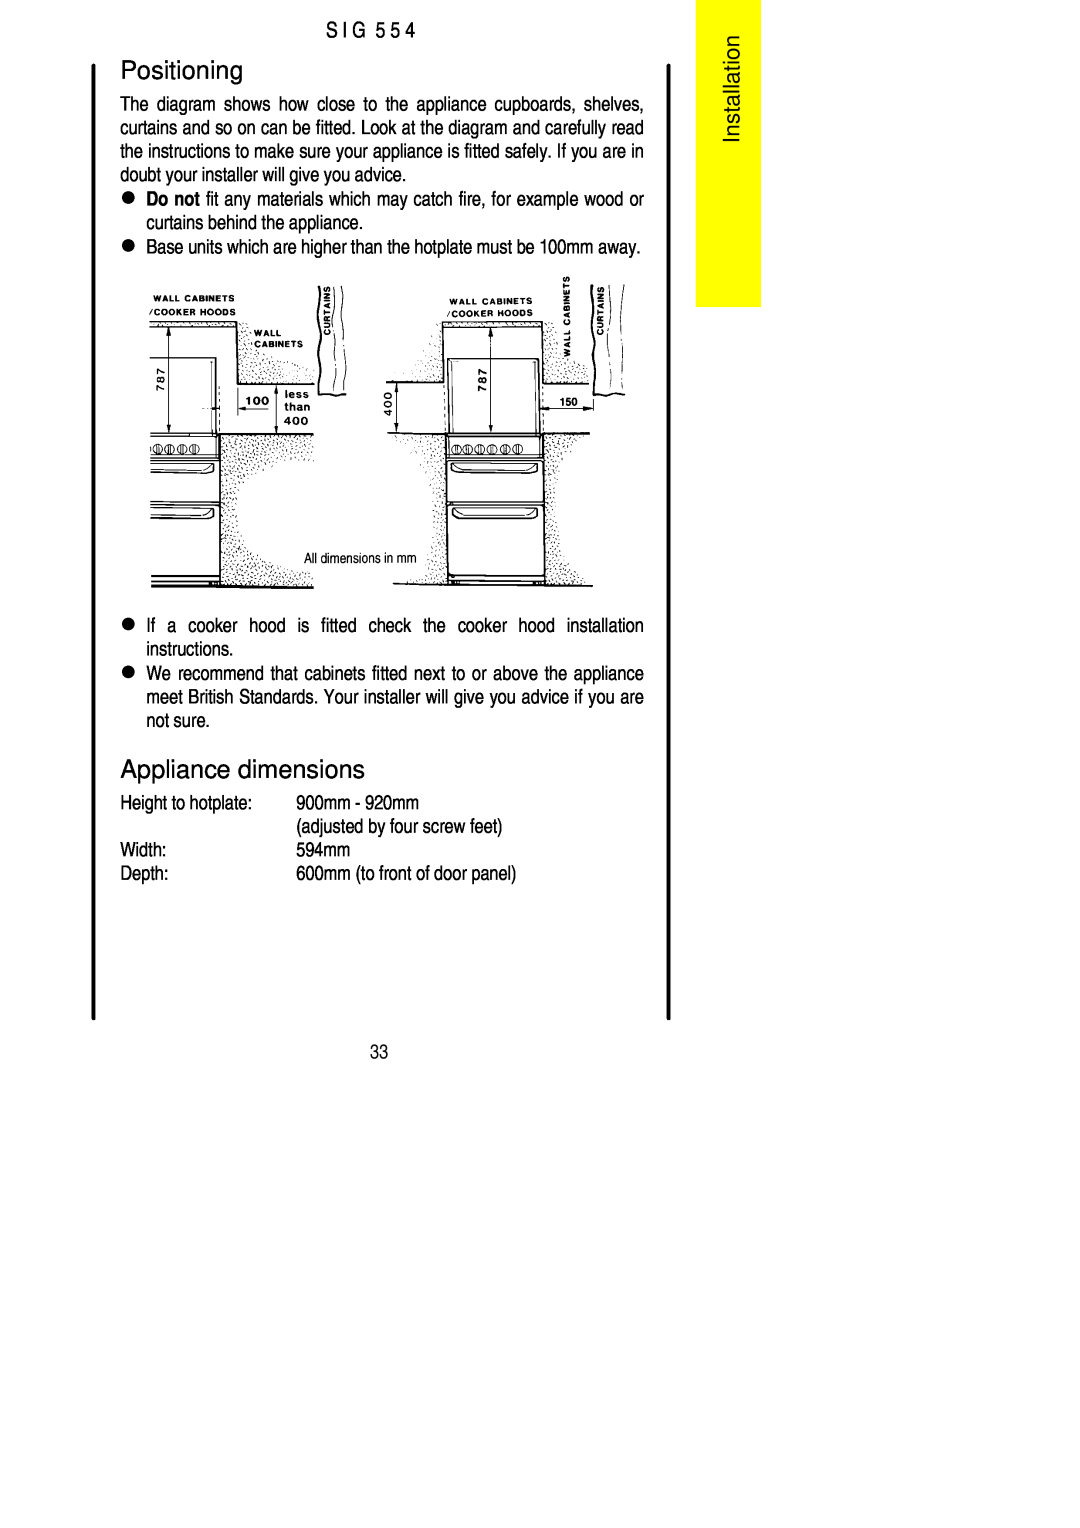 Parkinson Cowan SIG 554 installation instructions Positioning, Appliance dimensions, Installation, S I G 5 5 